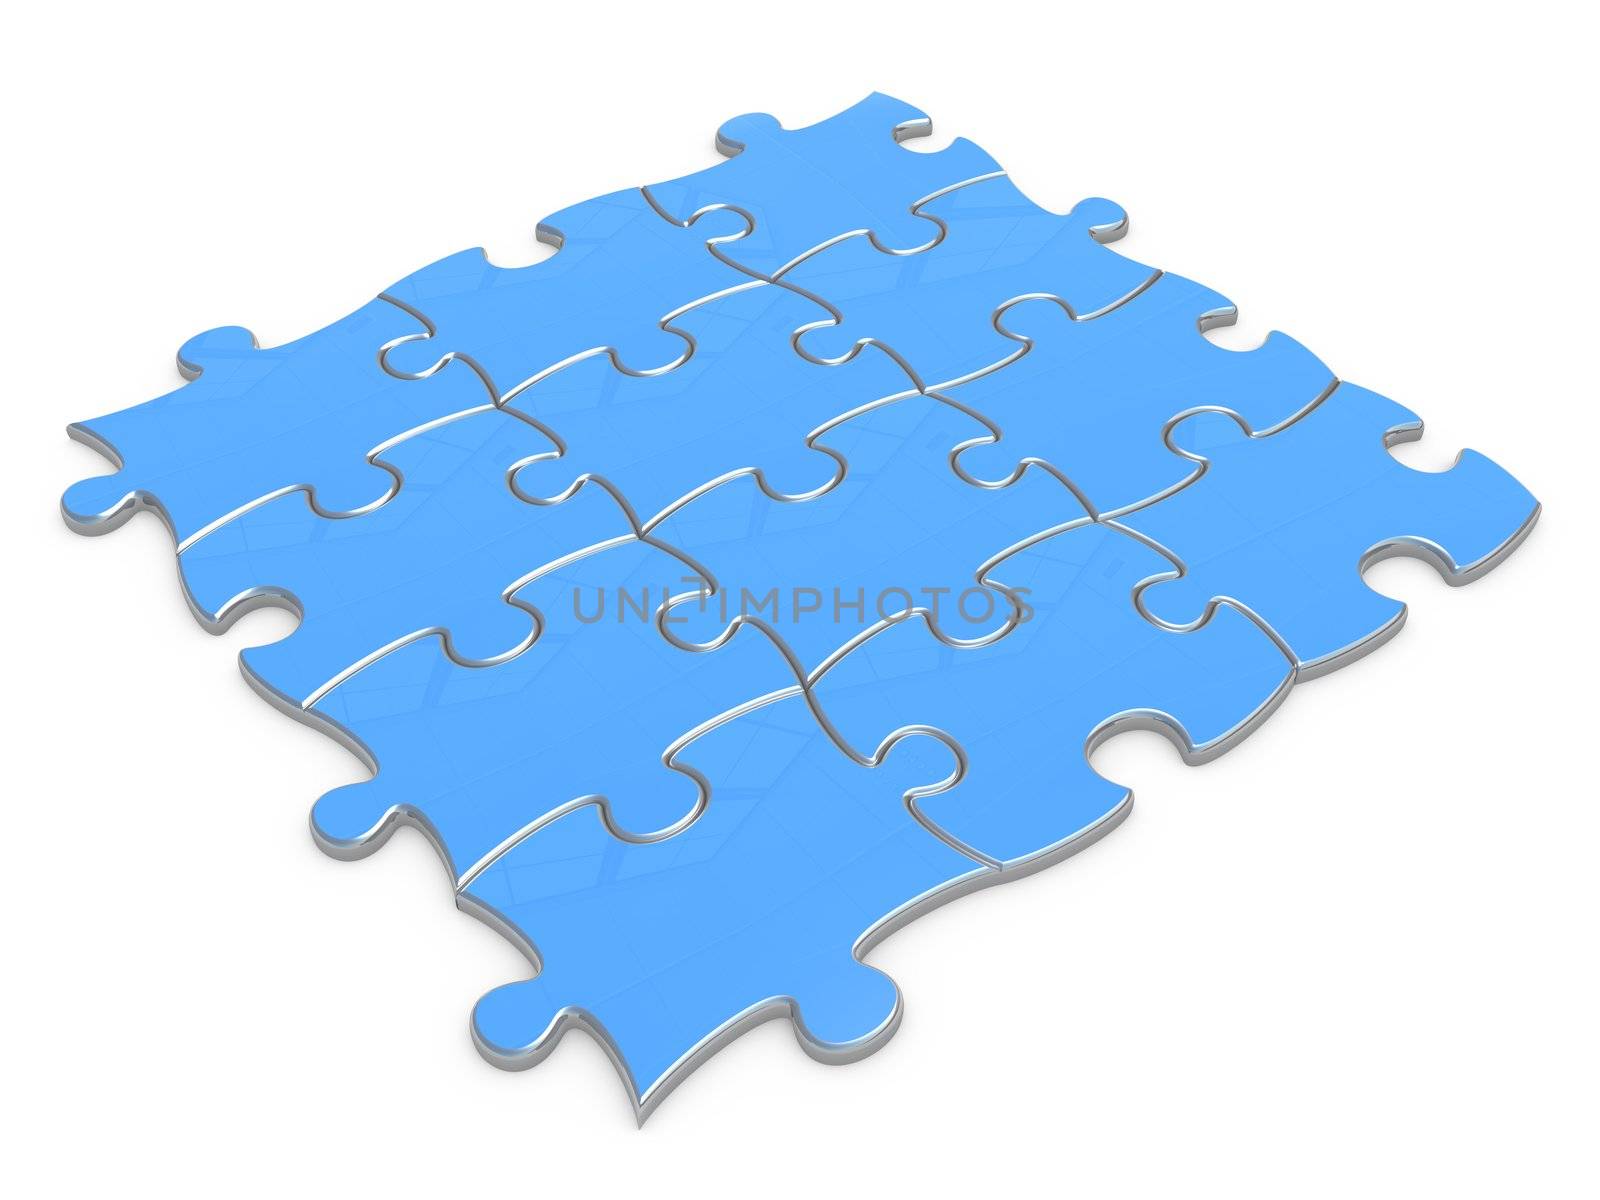 Jigsaw Puzzle by 3pod